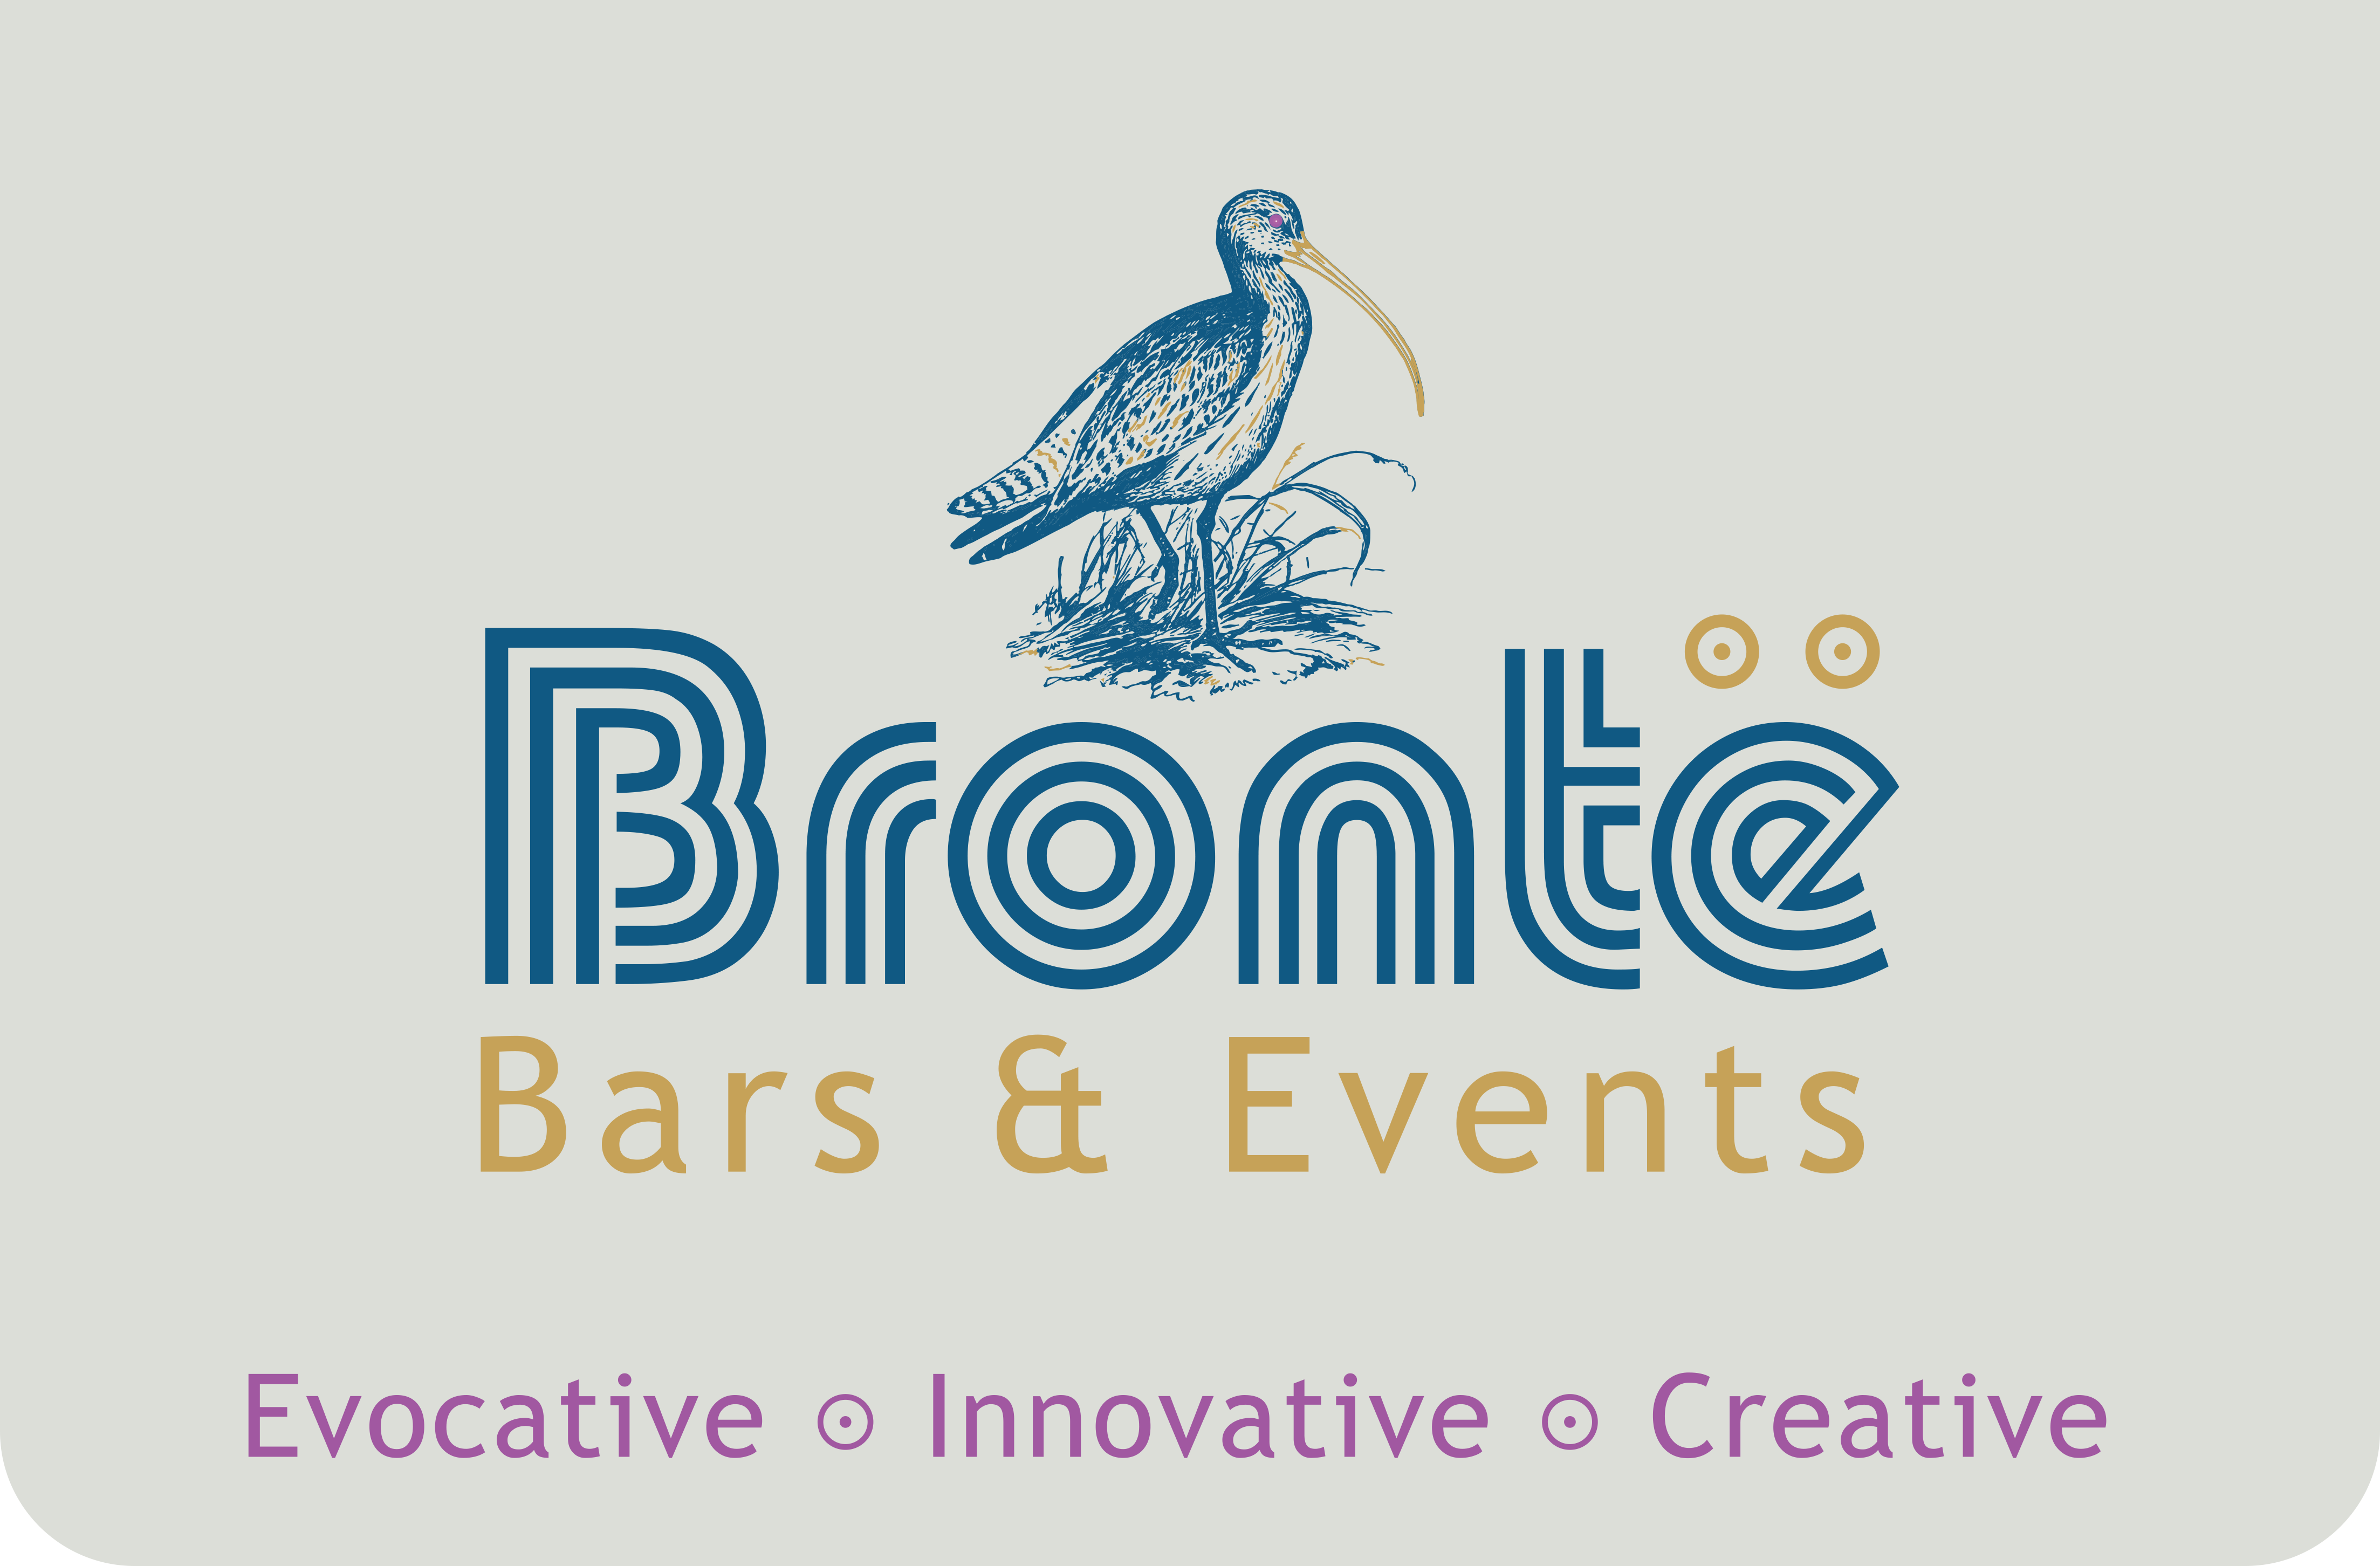 Bronte Bars & Events